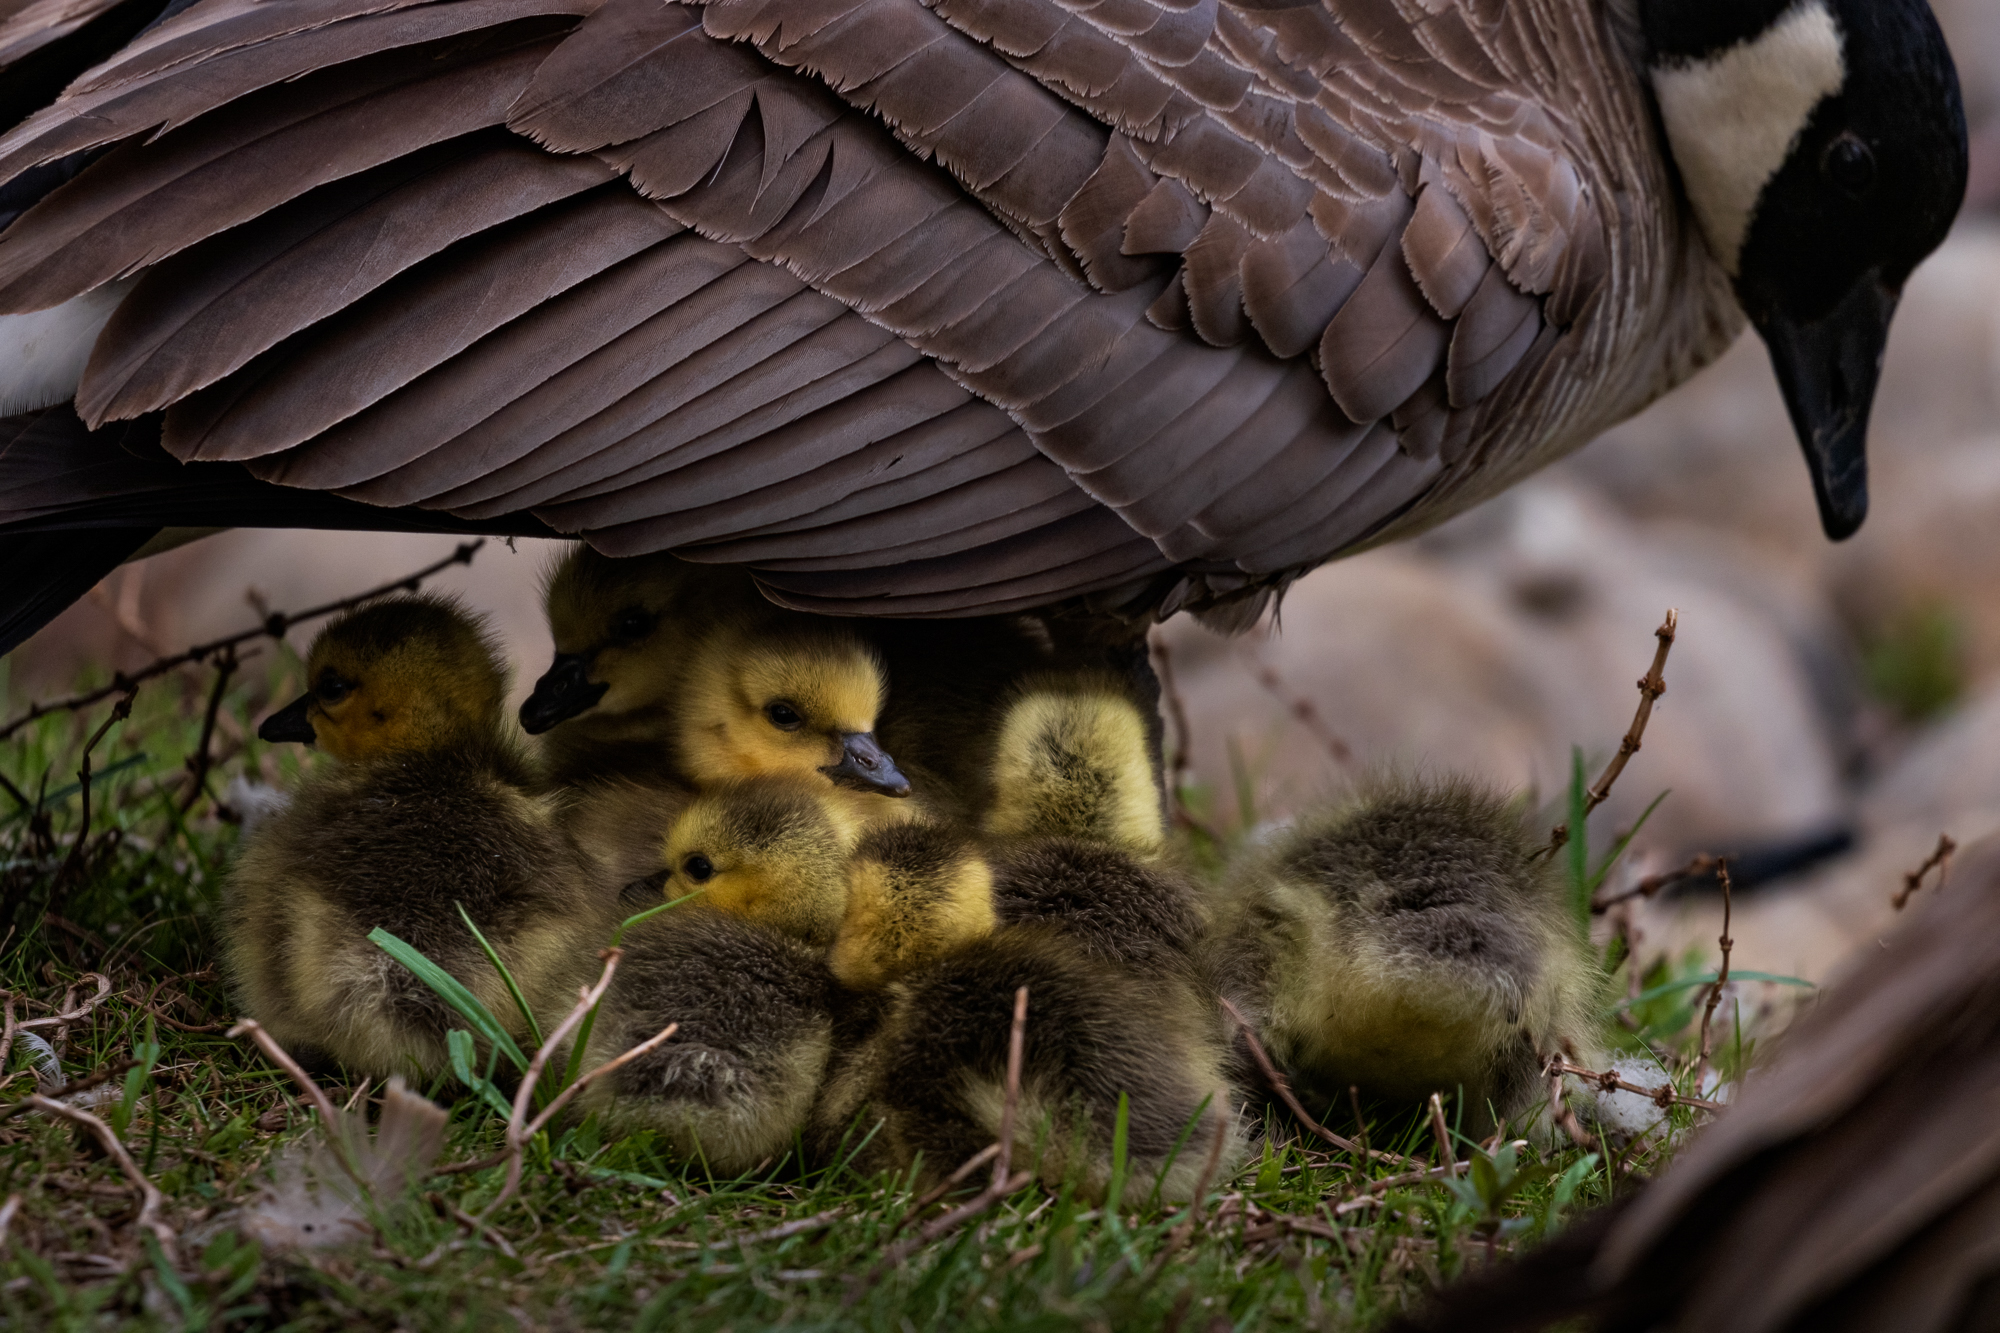 Canada Goose goslings nestling under mama goose